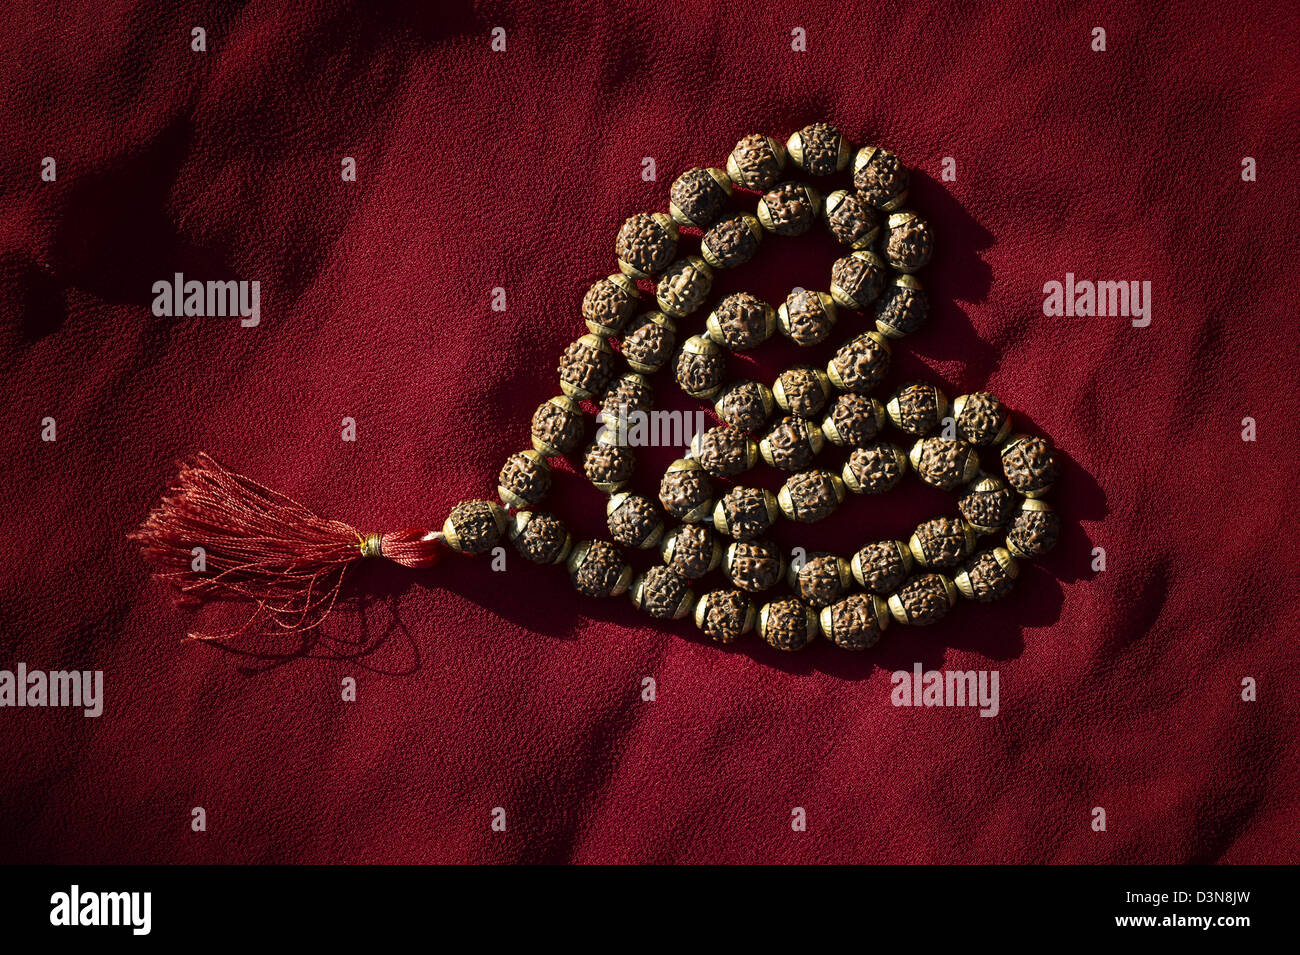 Rudraksha / Japa Mala prayer beads in a heart shape on red fabric Stock Photo